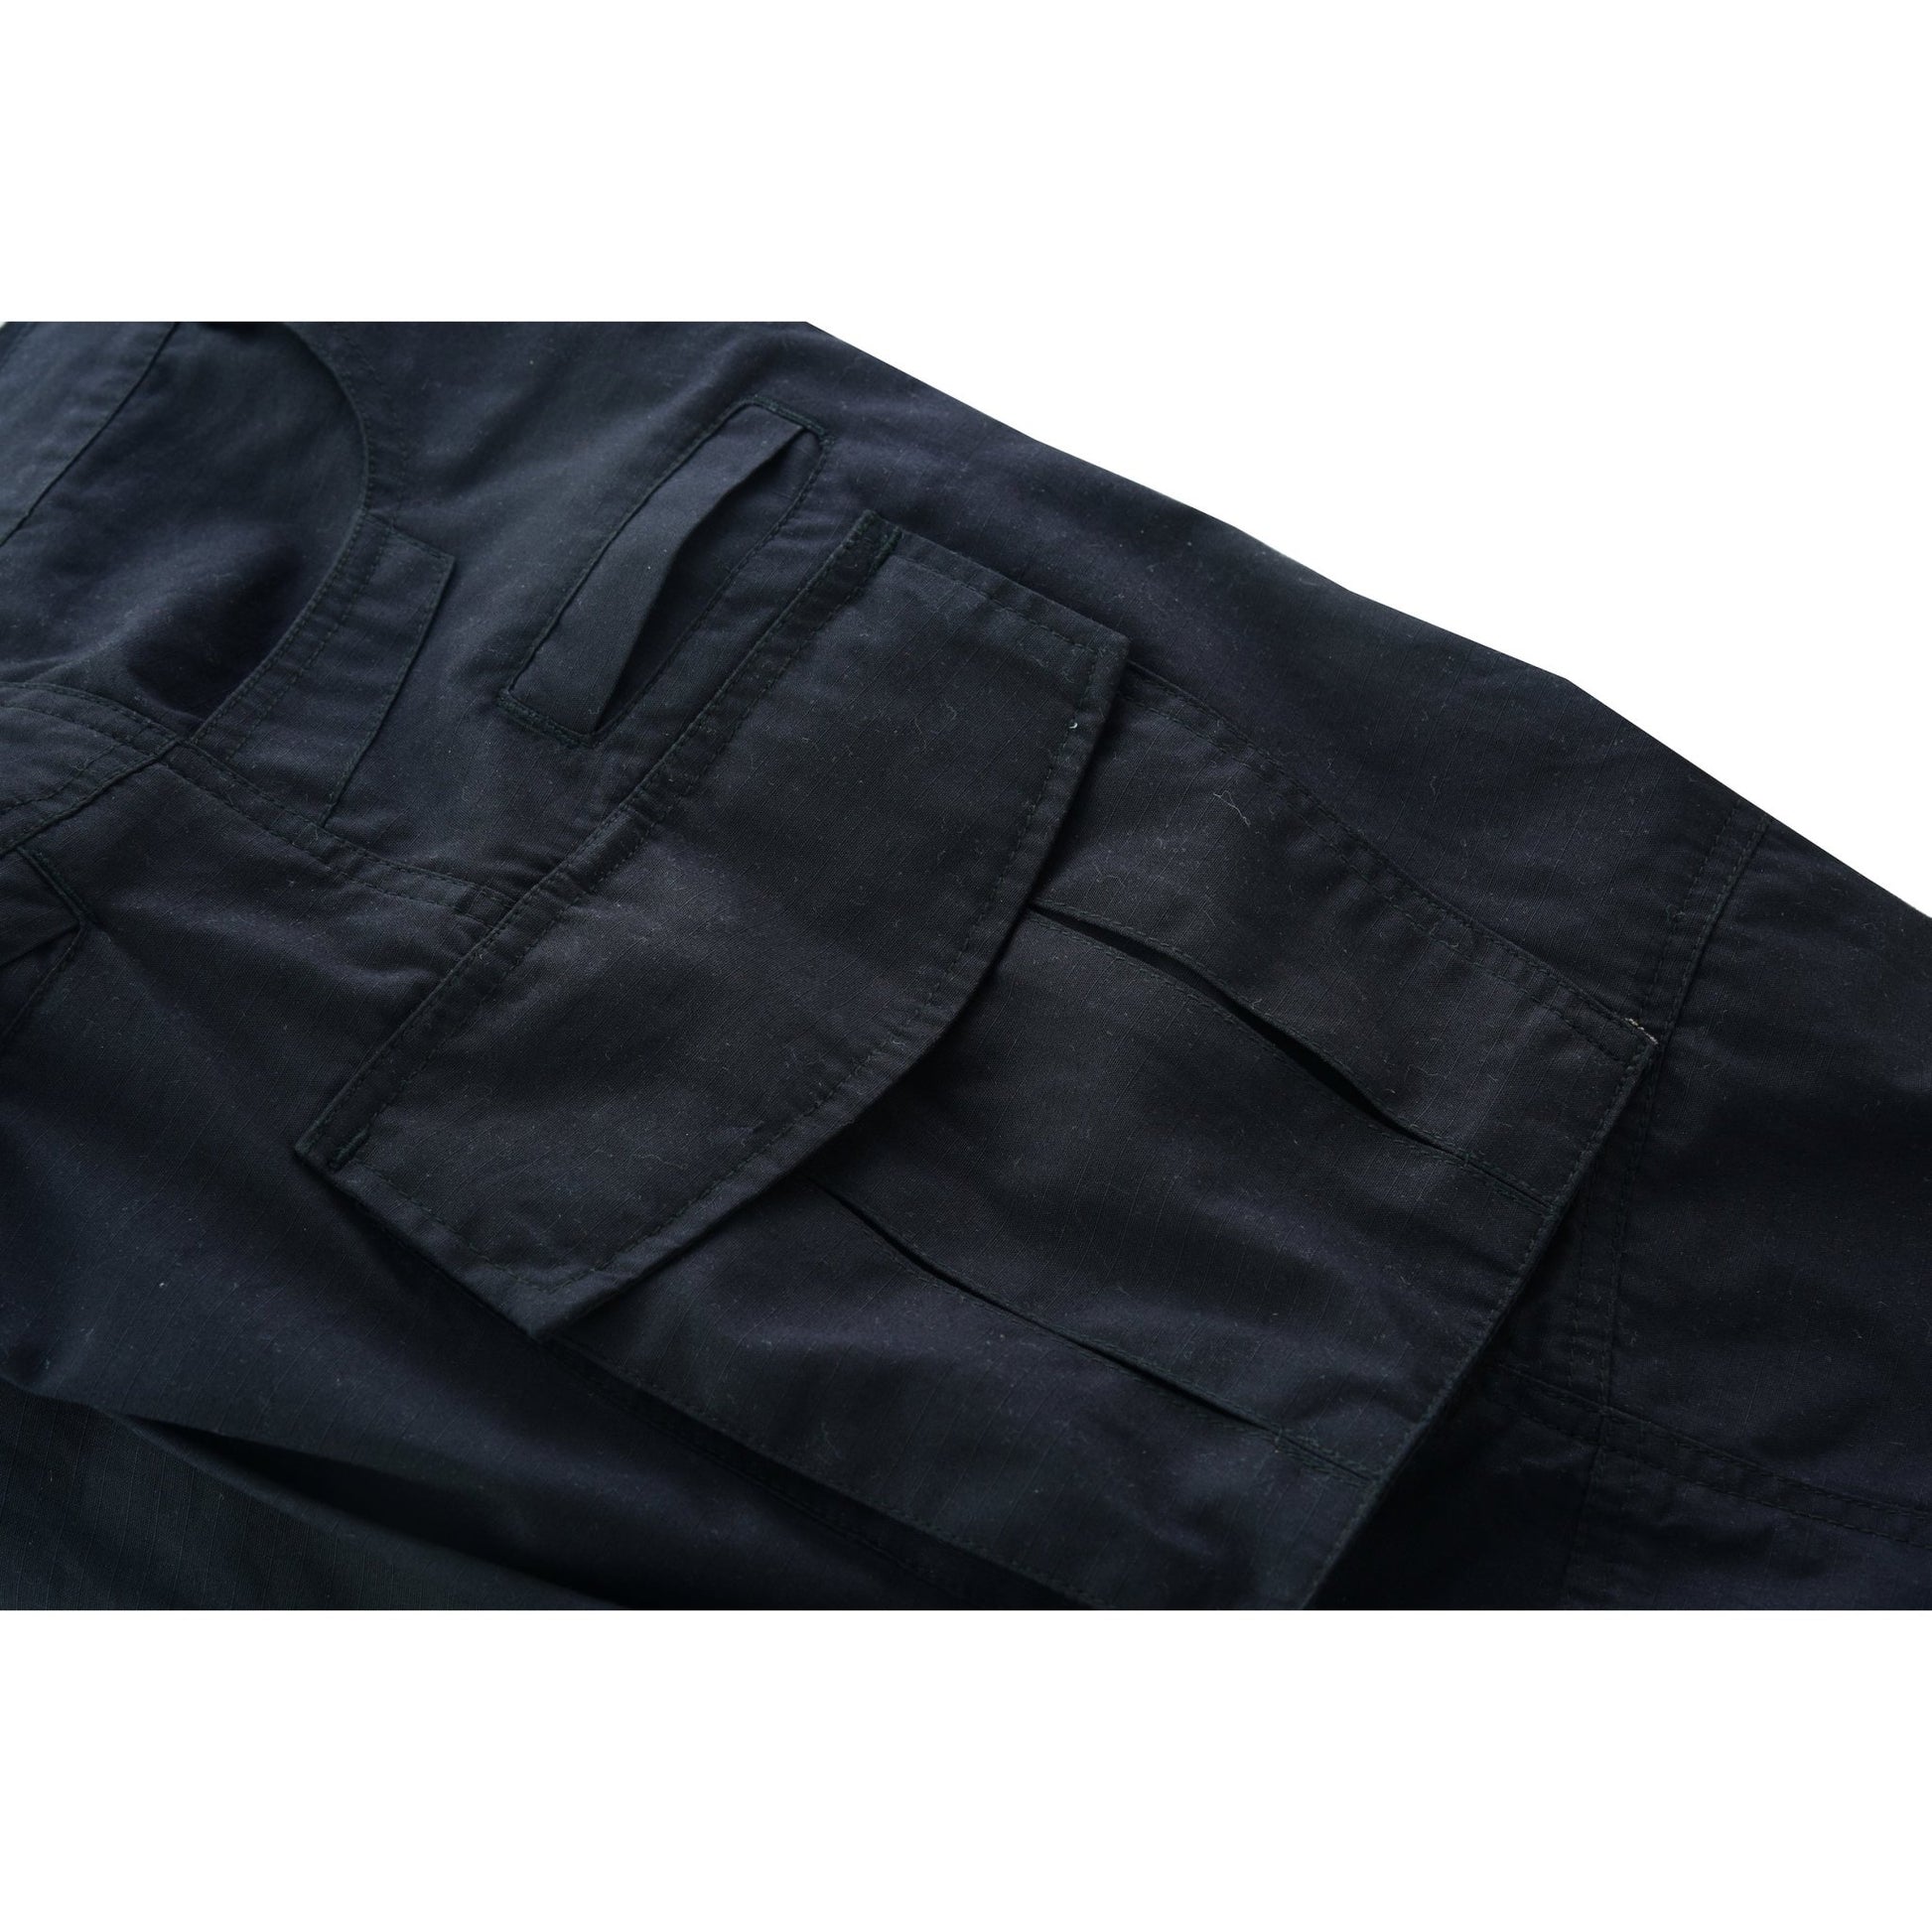 KONUSTEX TARIS pantalone RIBSTOP da tiro o caccia - OnTheRoad.shop - KONUSTEX